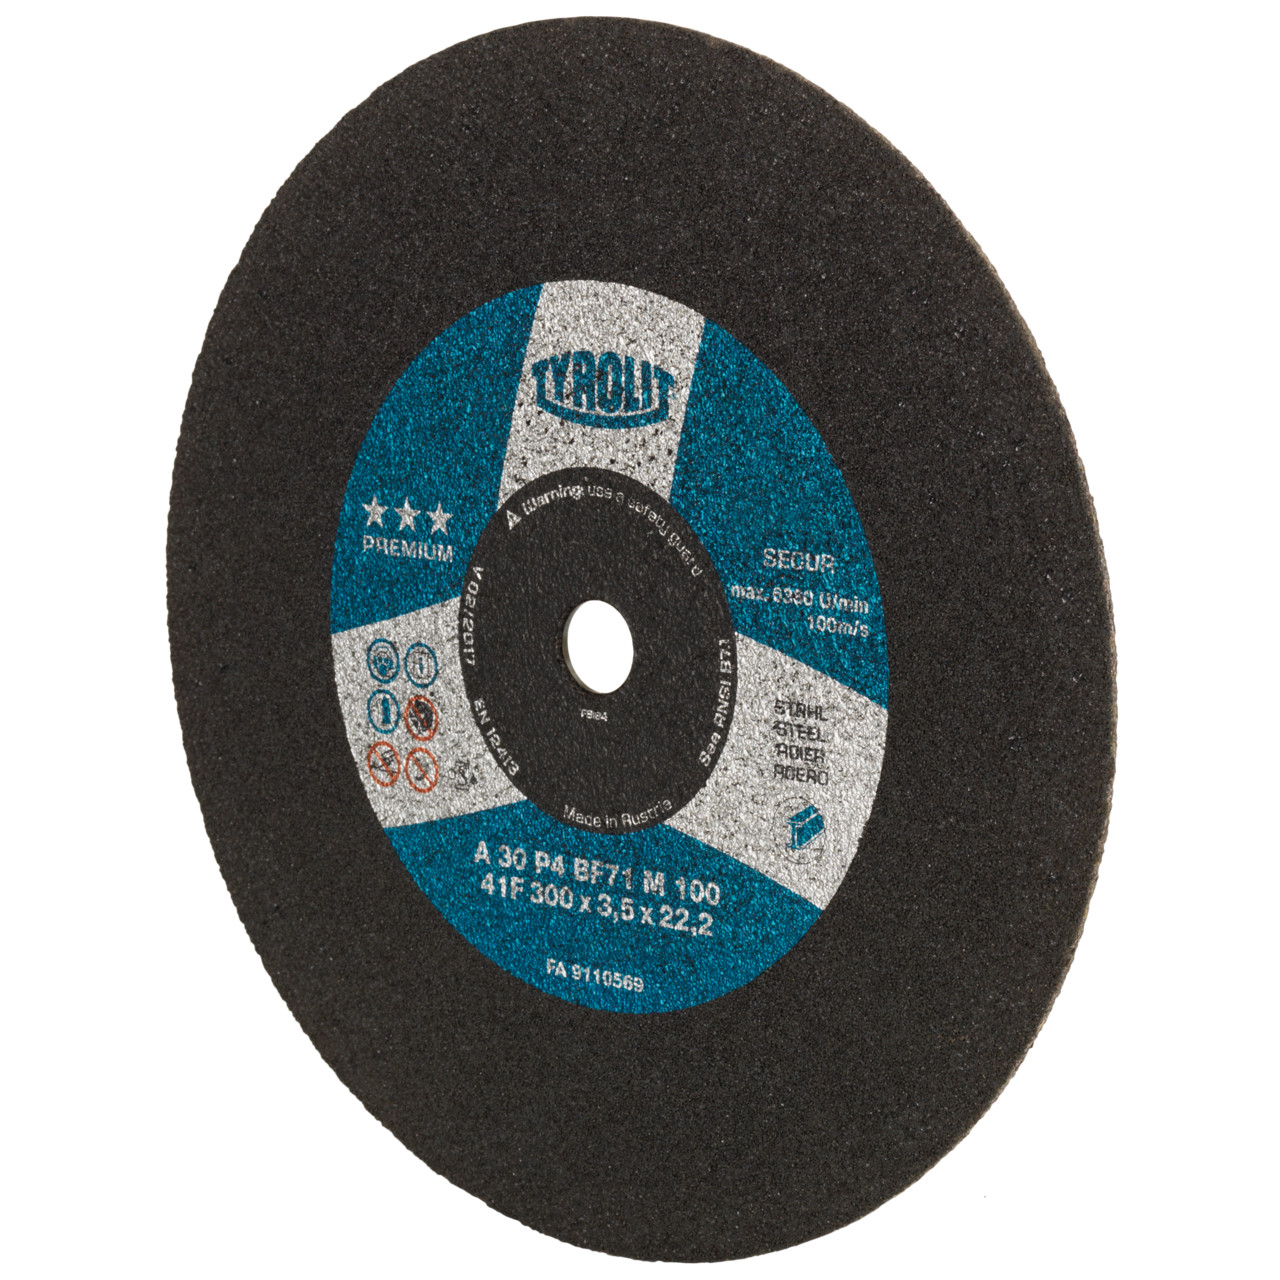 Tyrolit Cutting discs DxDxH 300x3.5x25.4 For steel, shape: 41 - straight version, Art. 643371